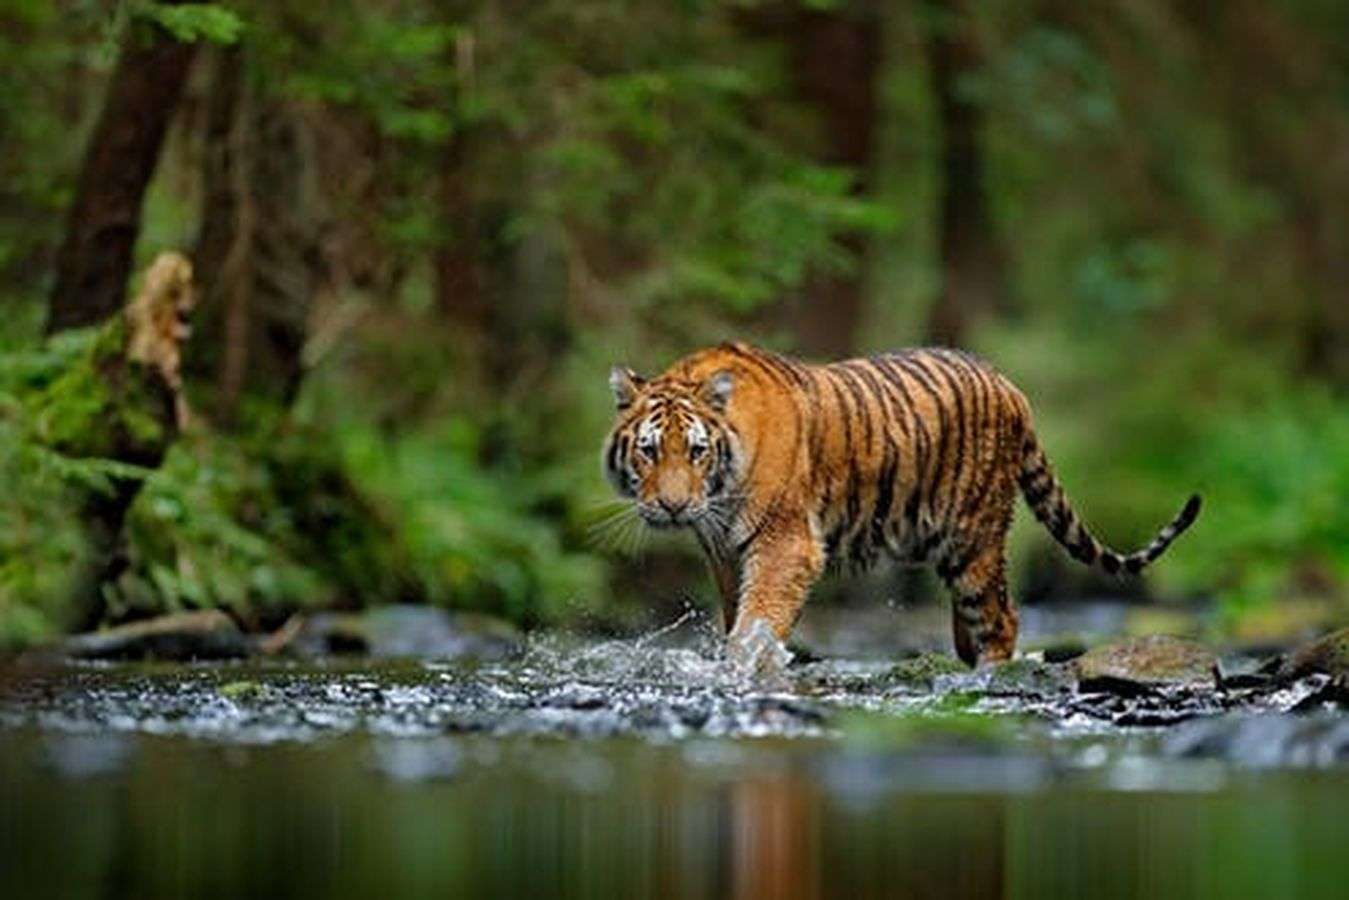 Badwah Tiger reserve